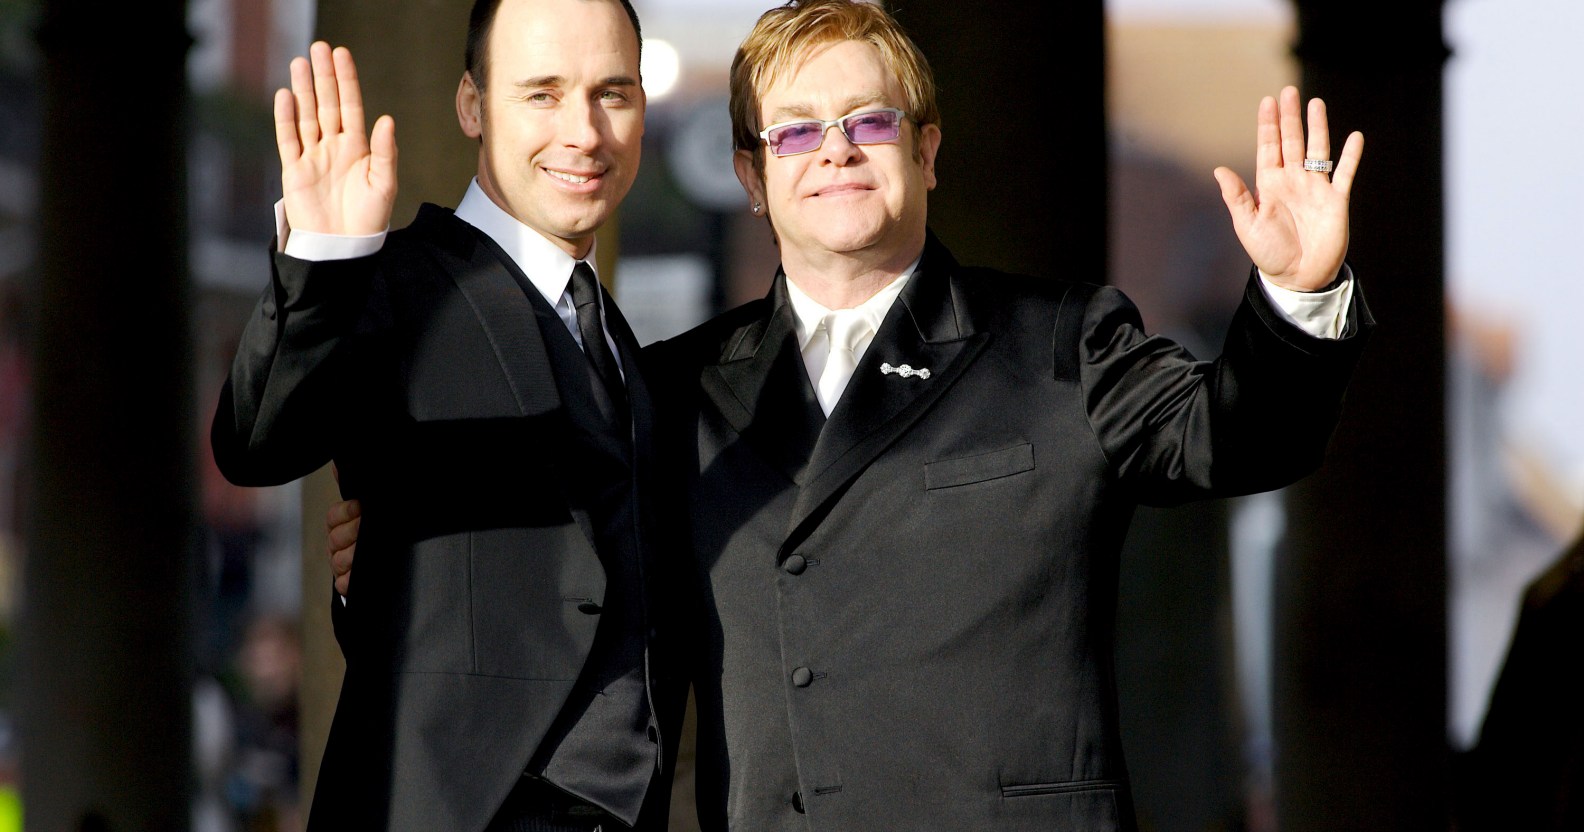 Sir Elton John and David Furnish's Civil Partnership Ceremony